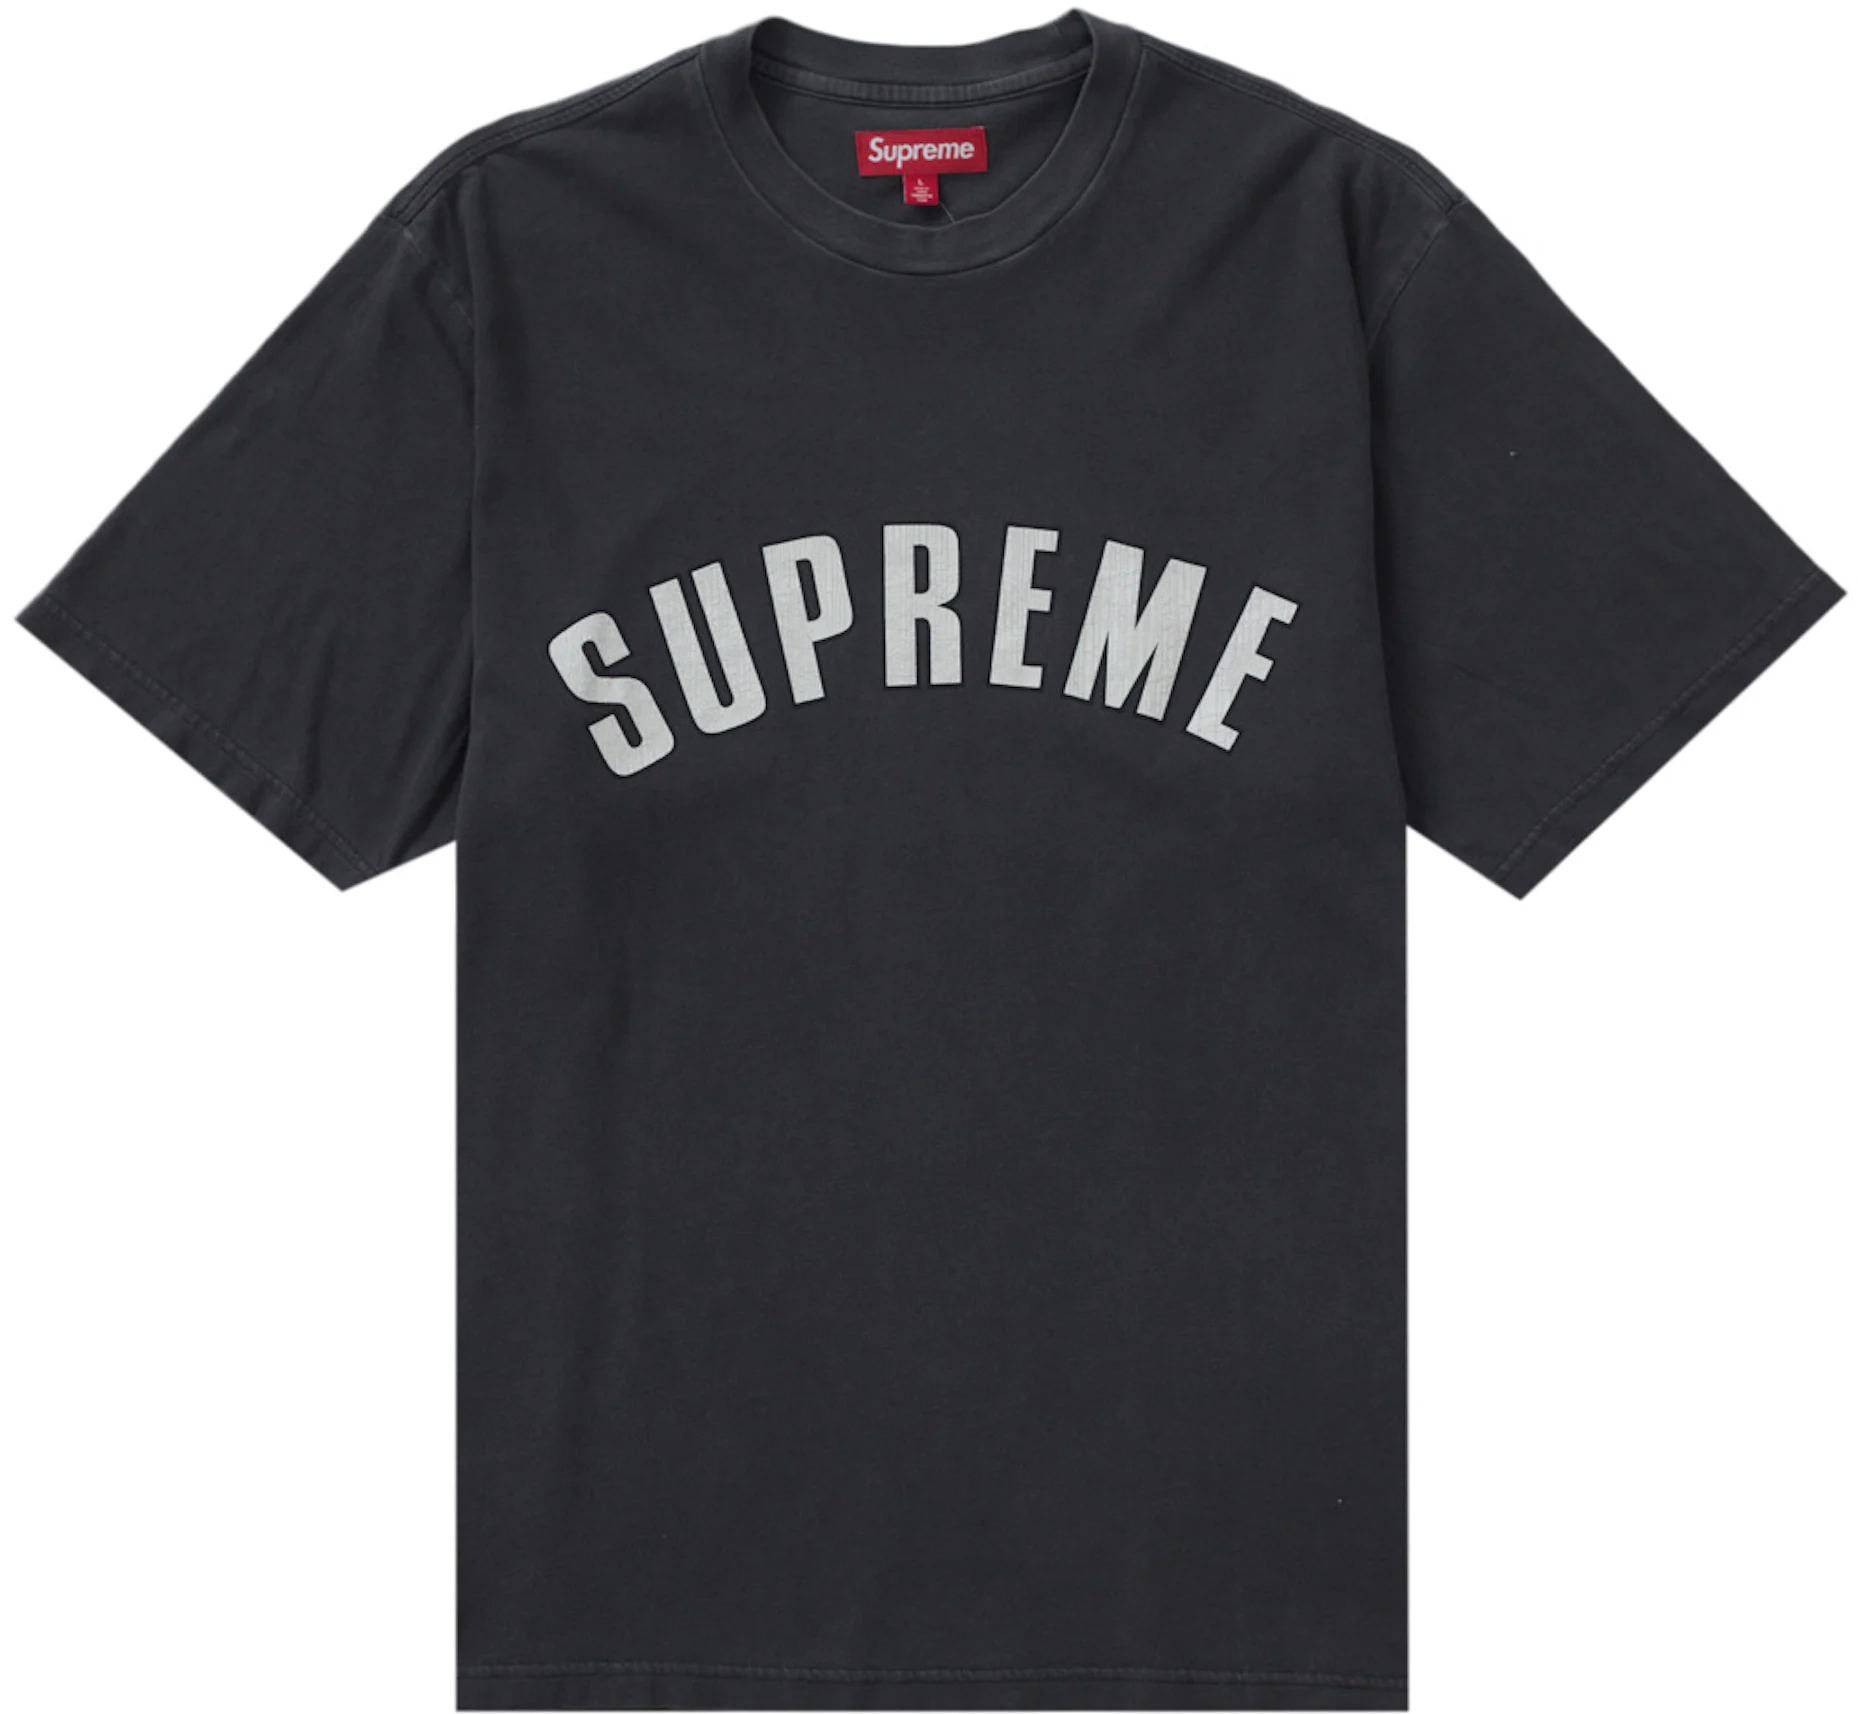 Supreme Apparel T Shirts Canada - Supreme Store Online